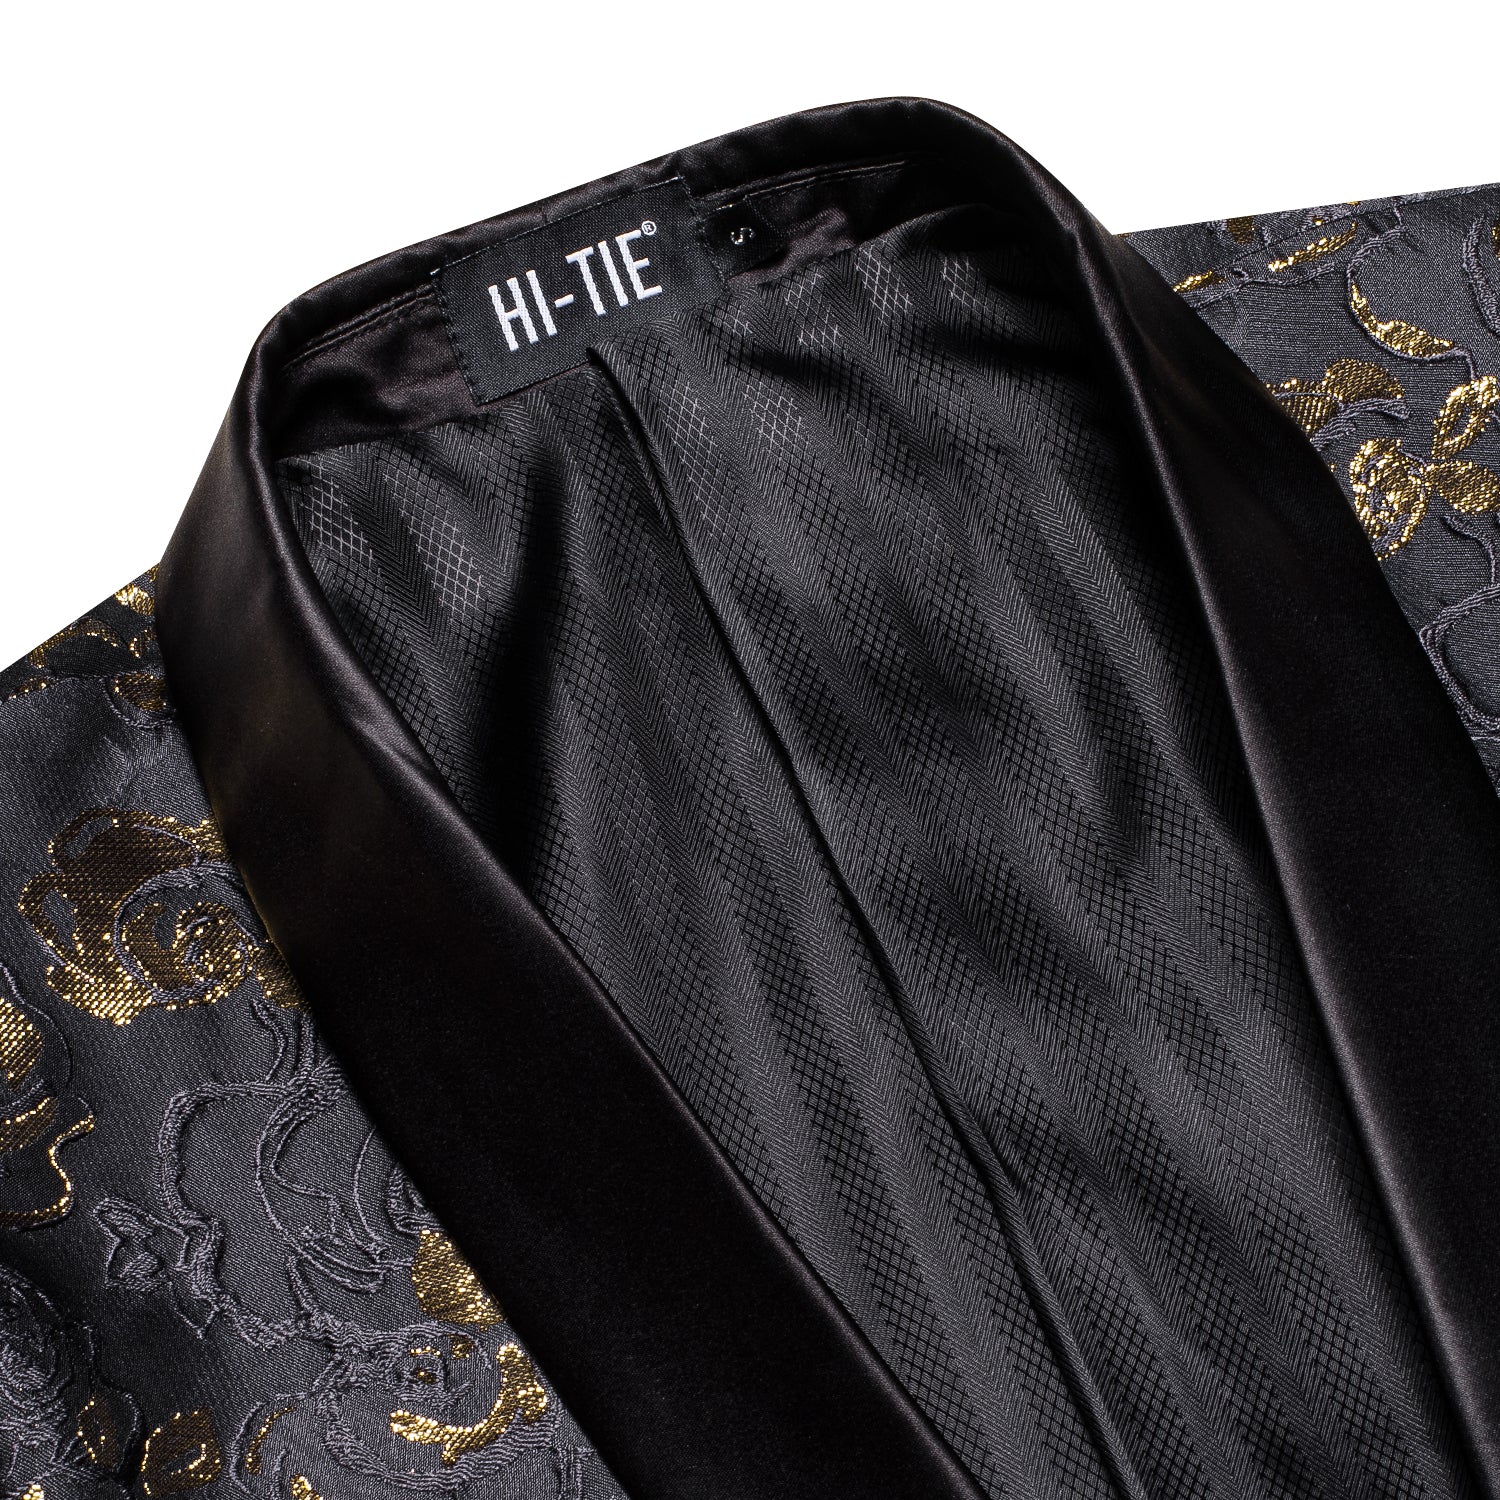 Hi-Tie Luxury Black Golden Floral Men's Suit Set